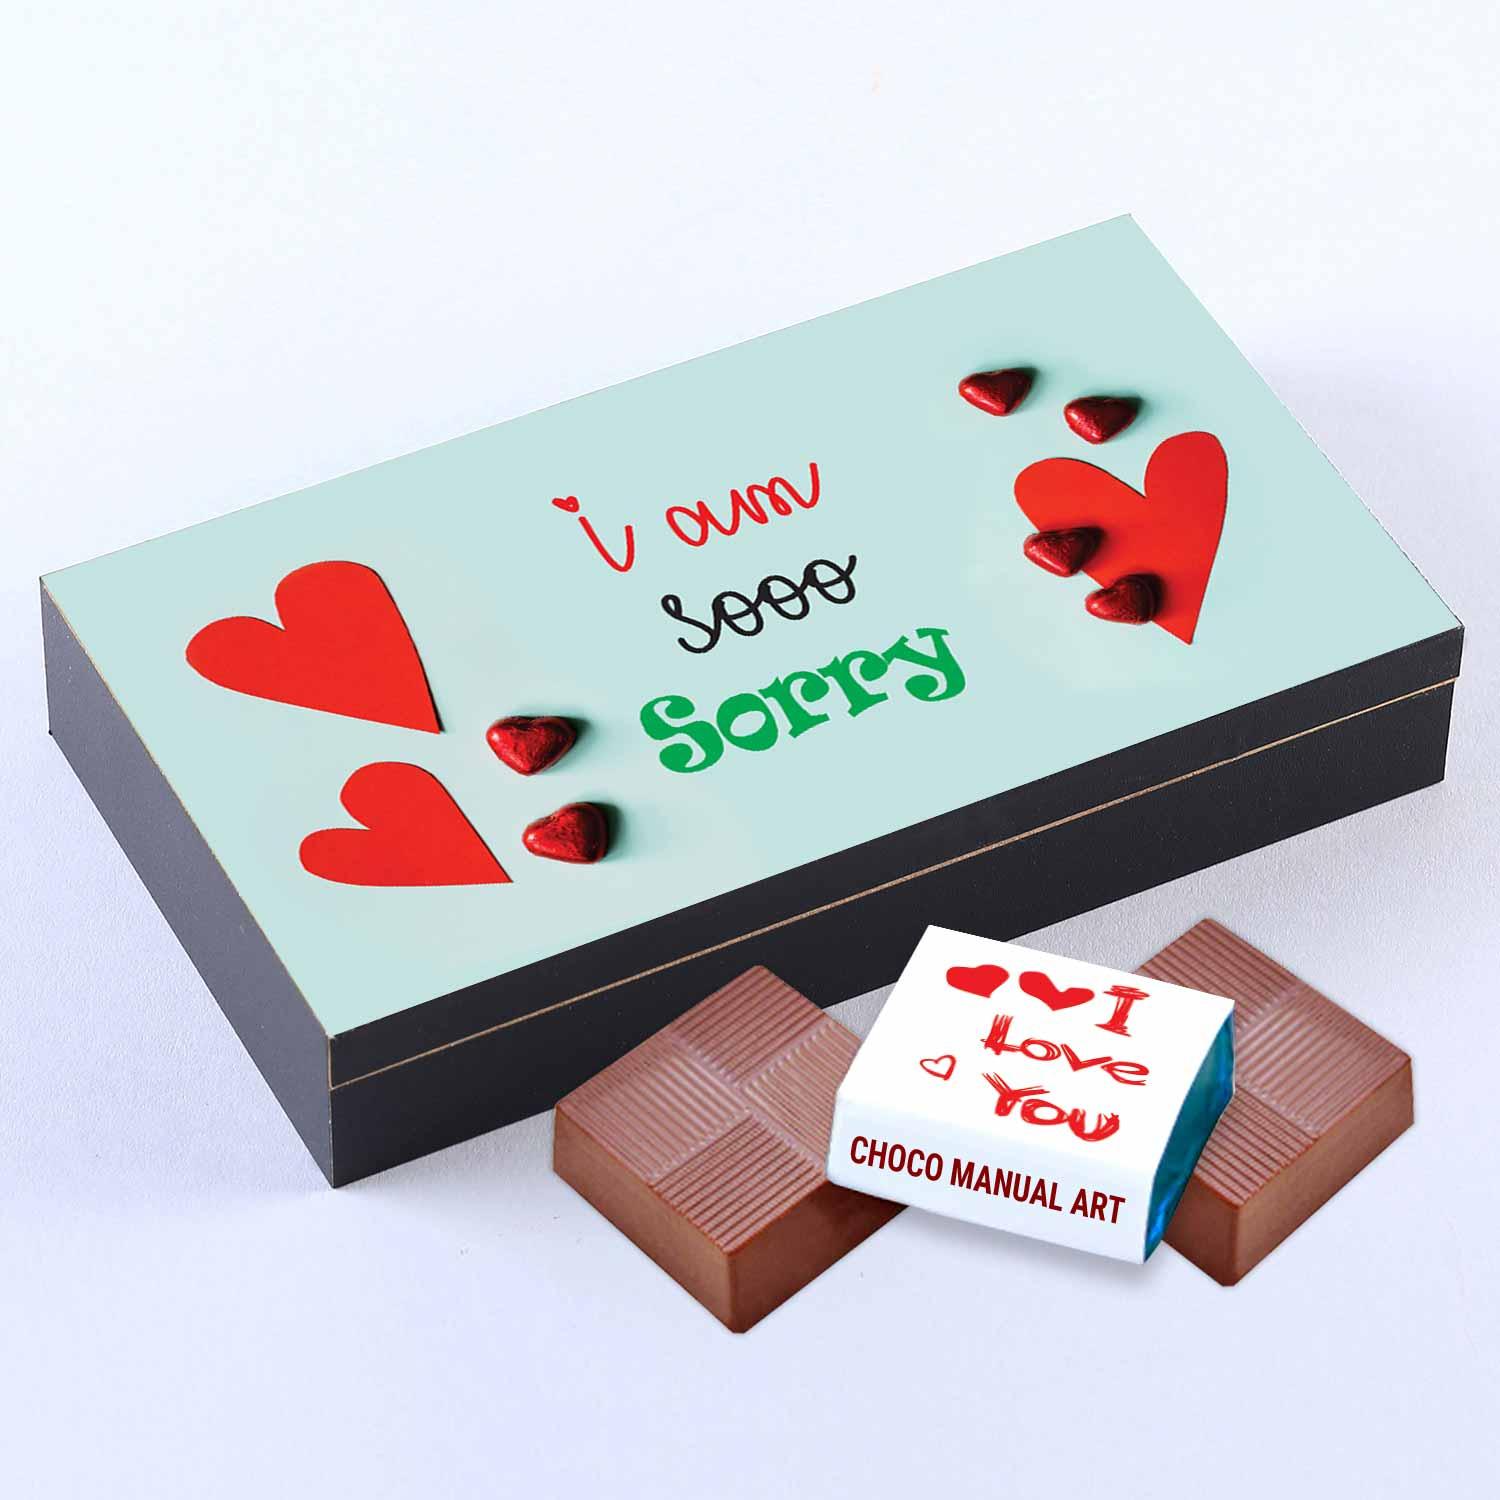 I Am Sorry Chocolate Box - Choco Manual ART